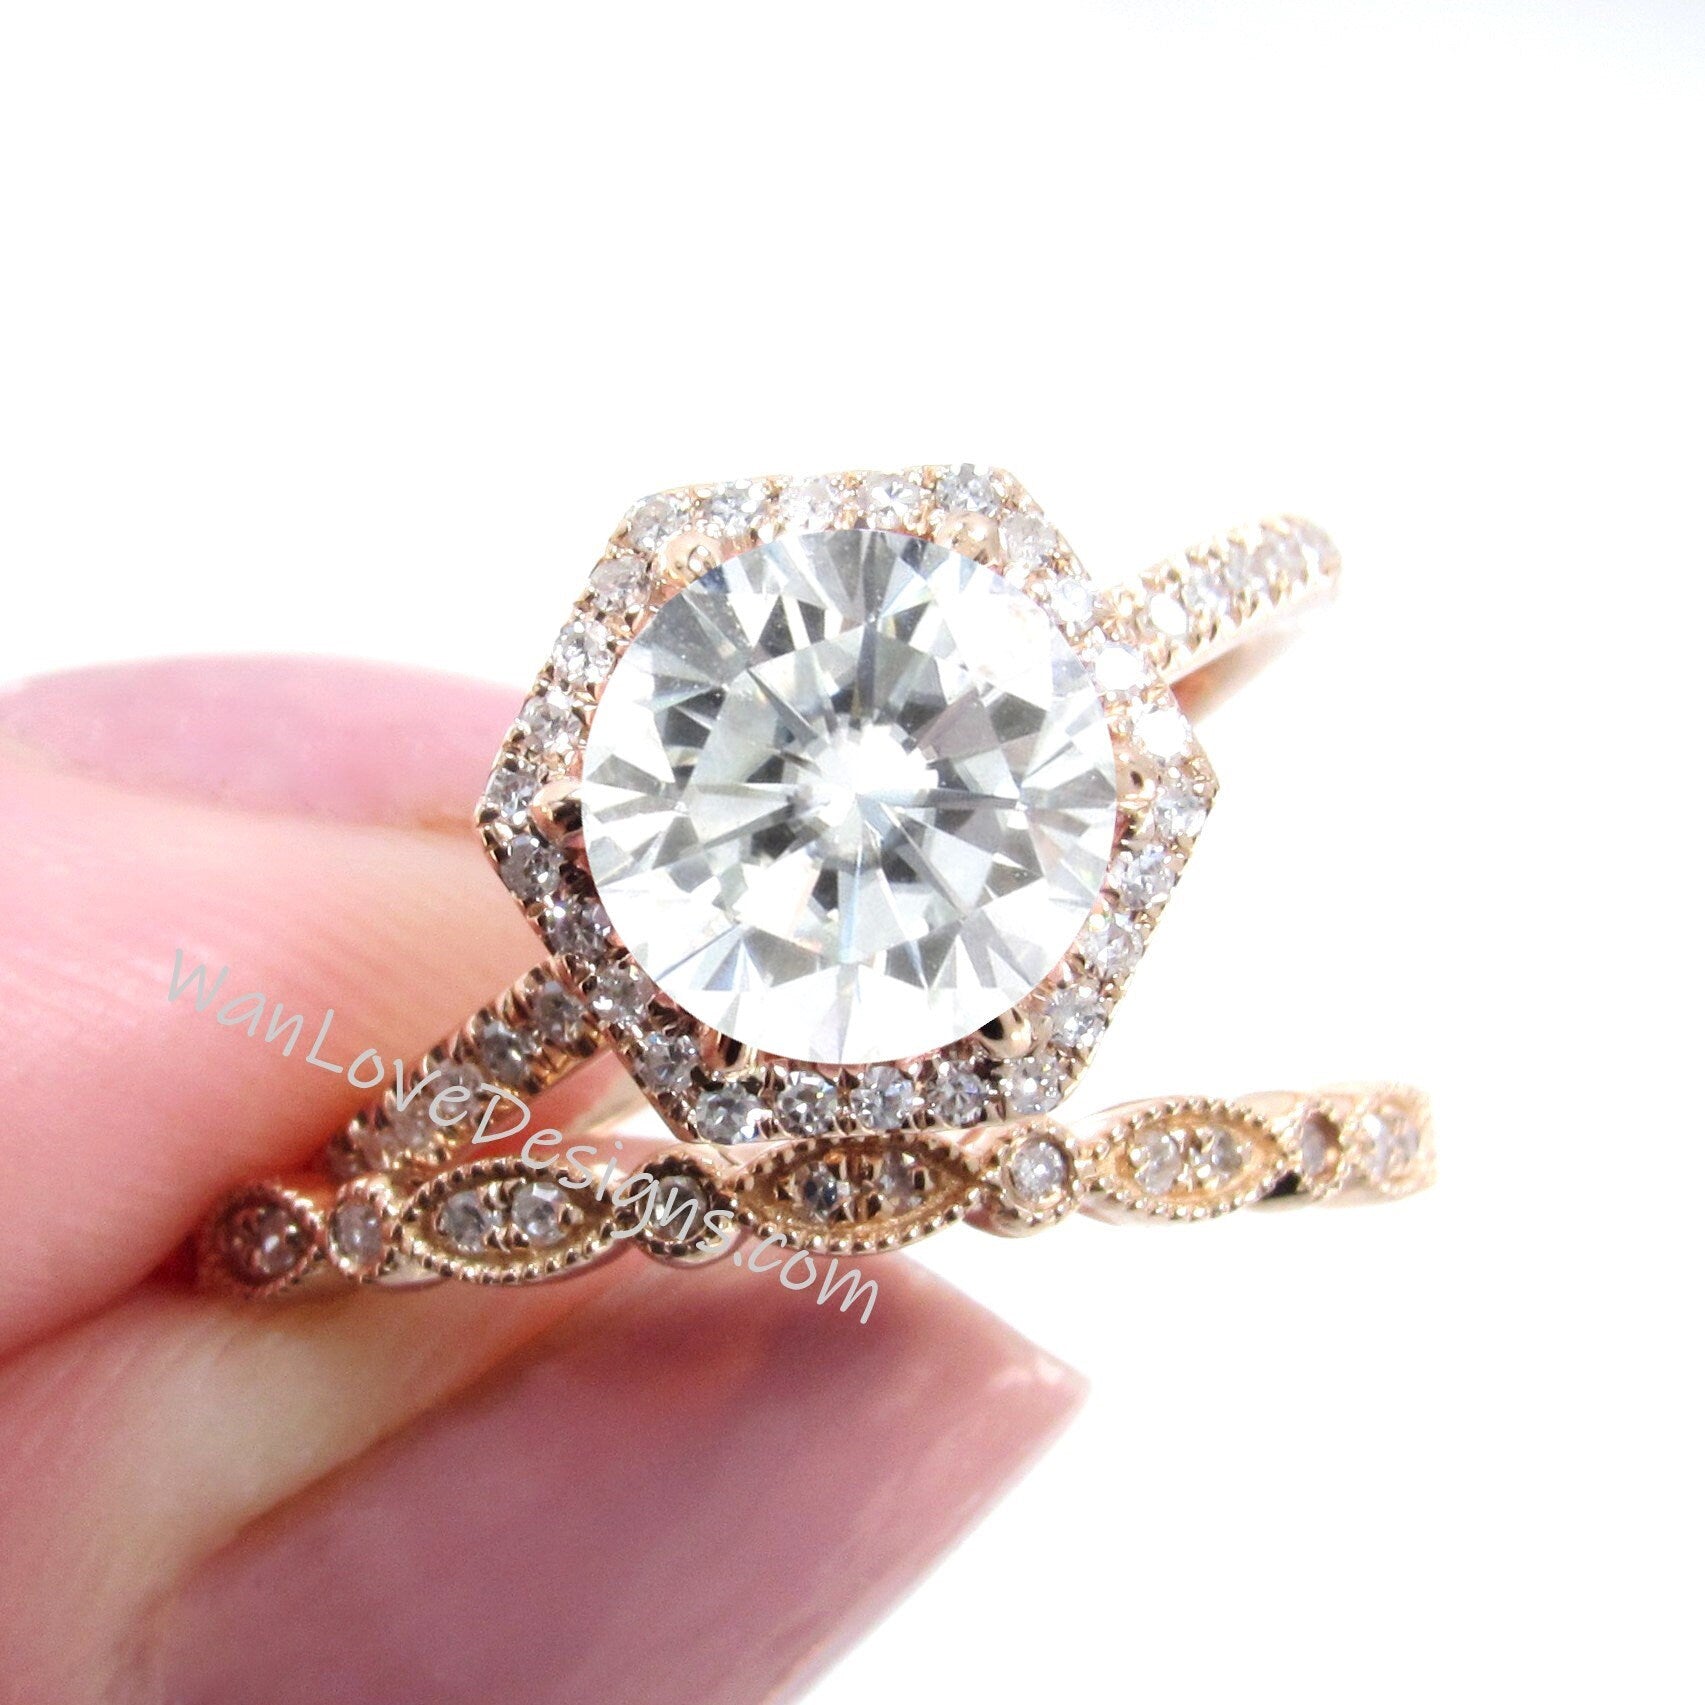 Hexagon cut diamond engagement ring set rose gold Certified diamond halo ring bridal set half eternity wedding band anniversary ring gift Wan Love Designs